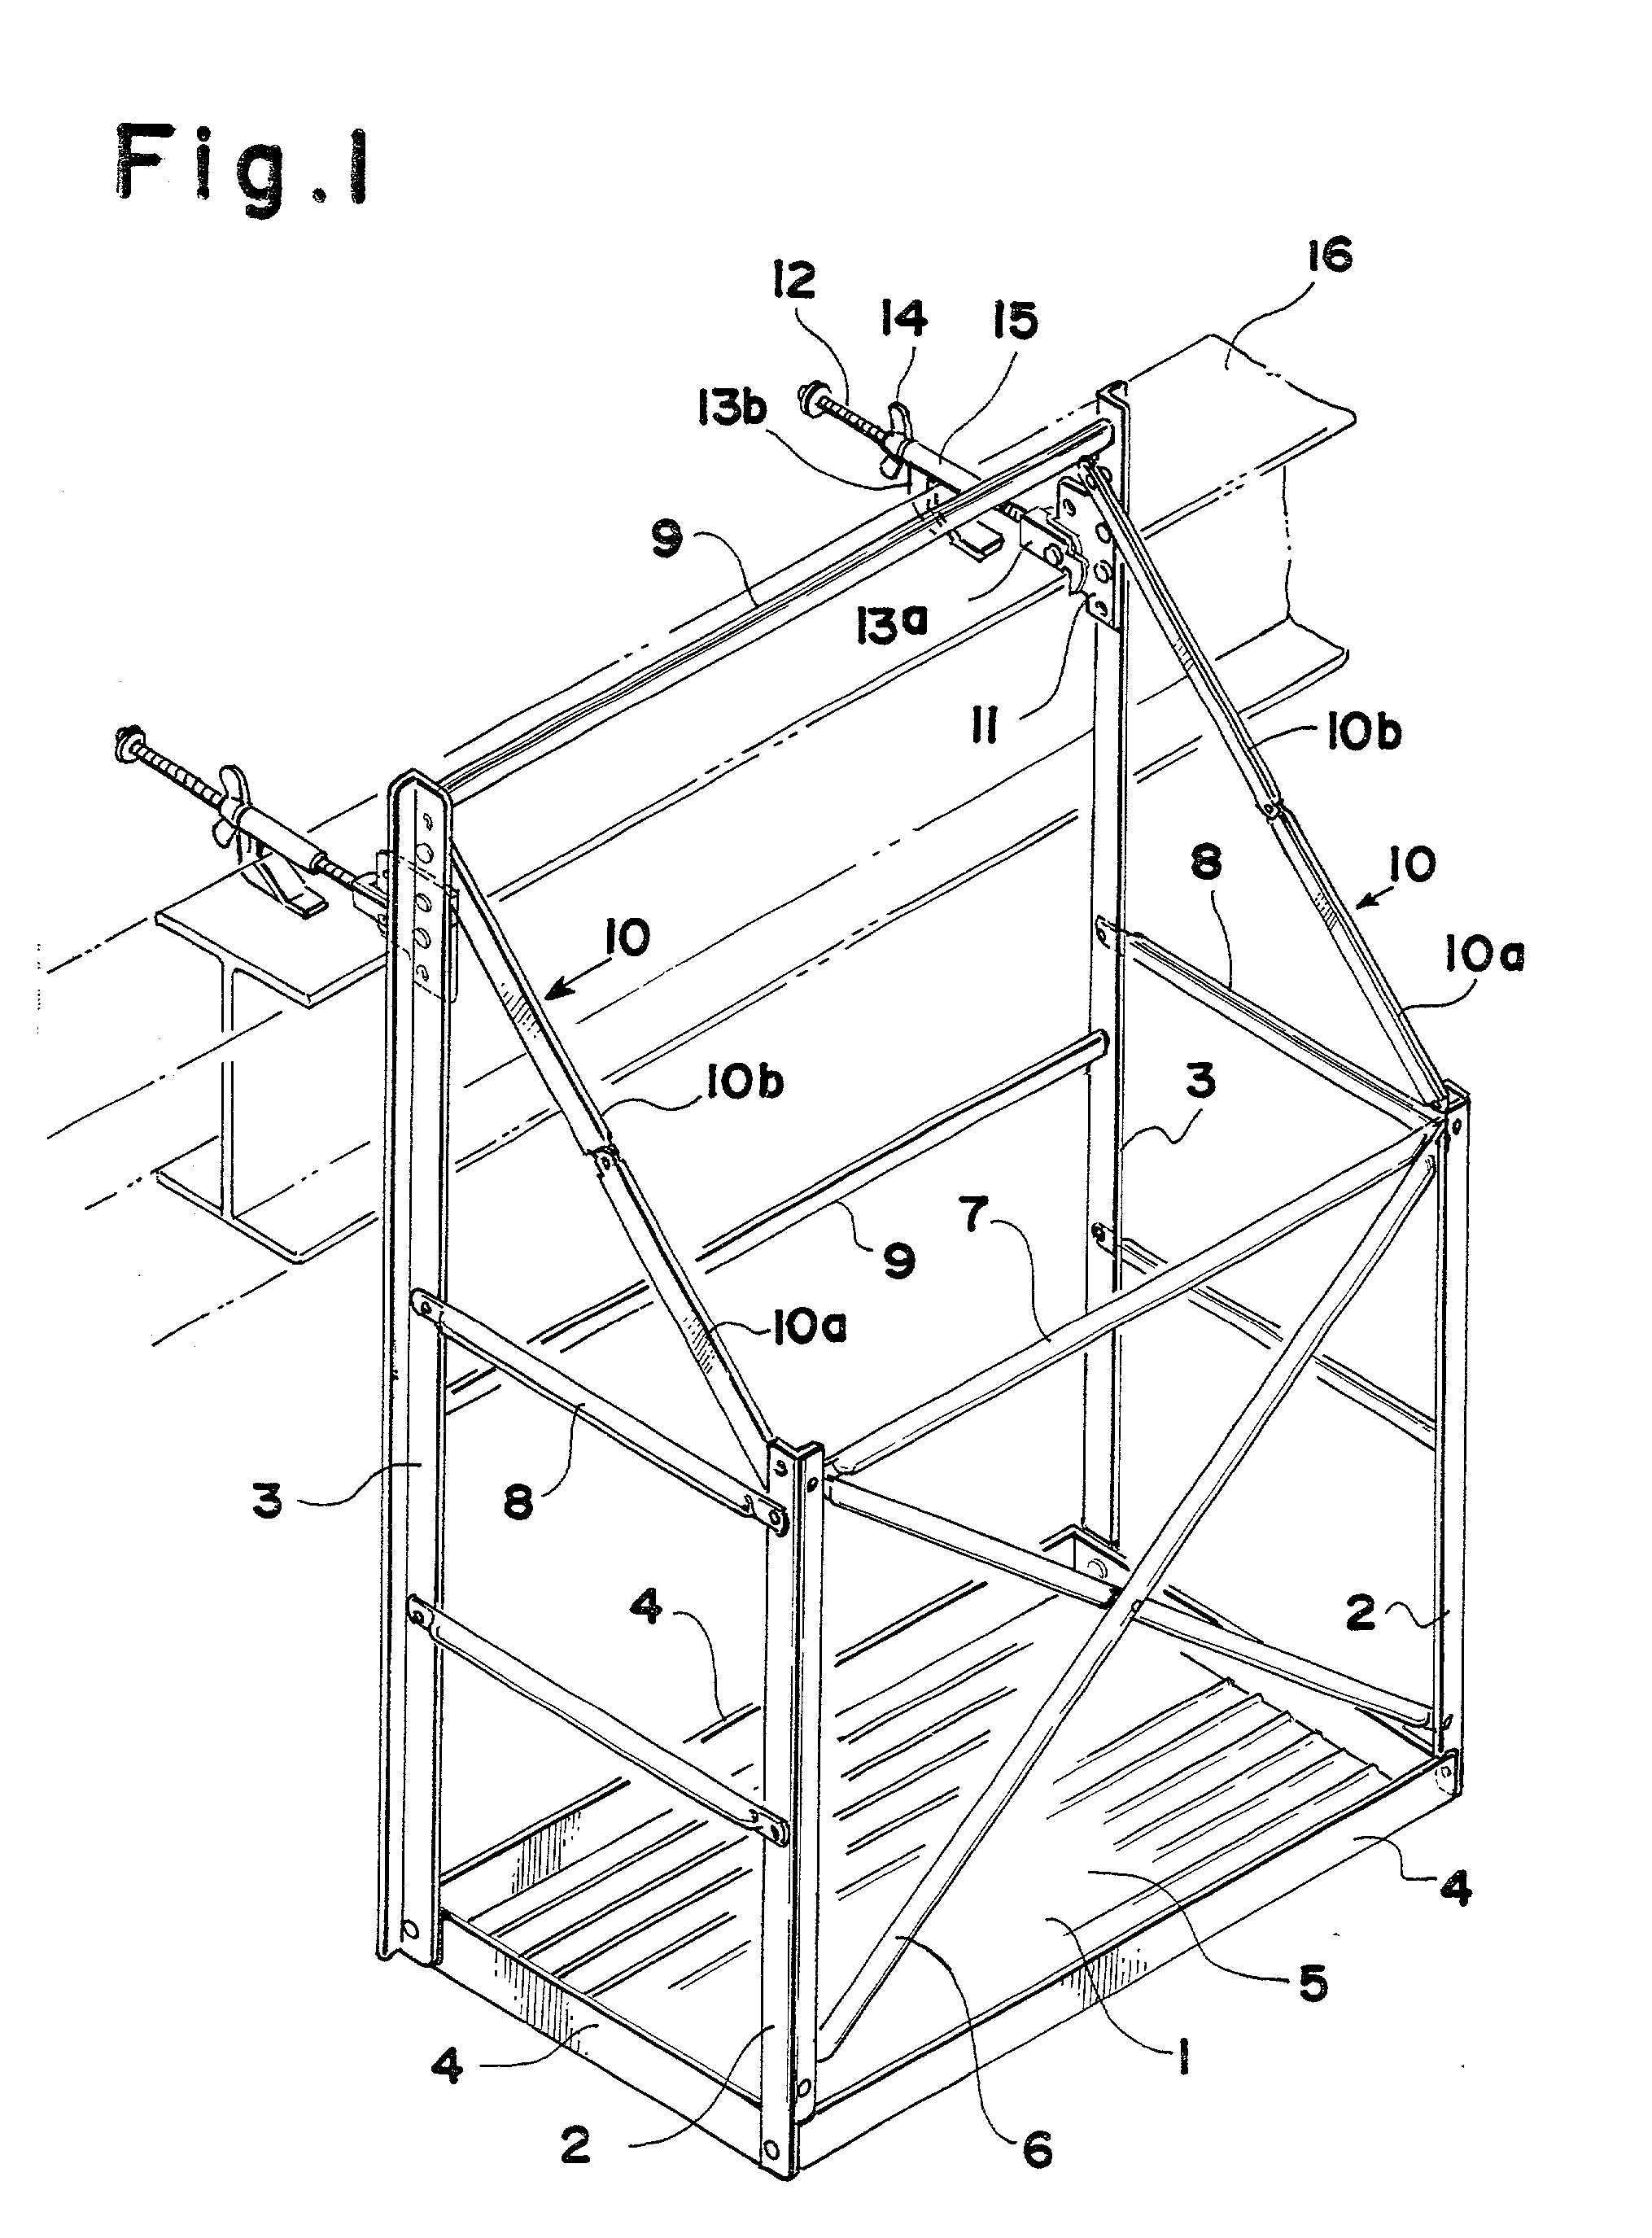 Foldable scaffold device